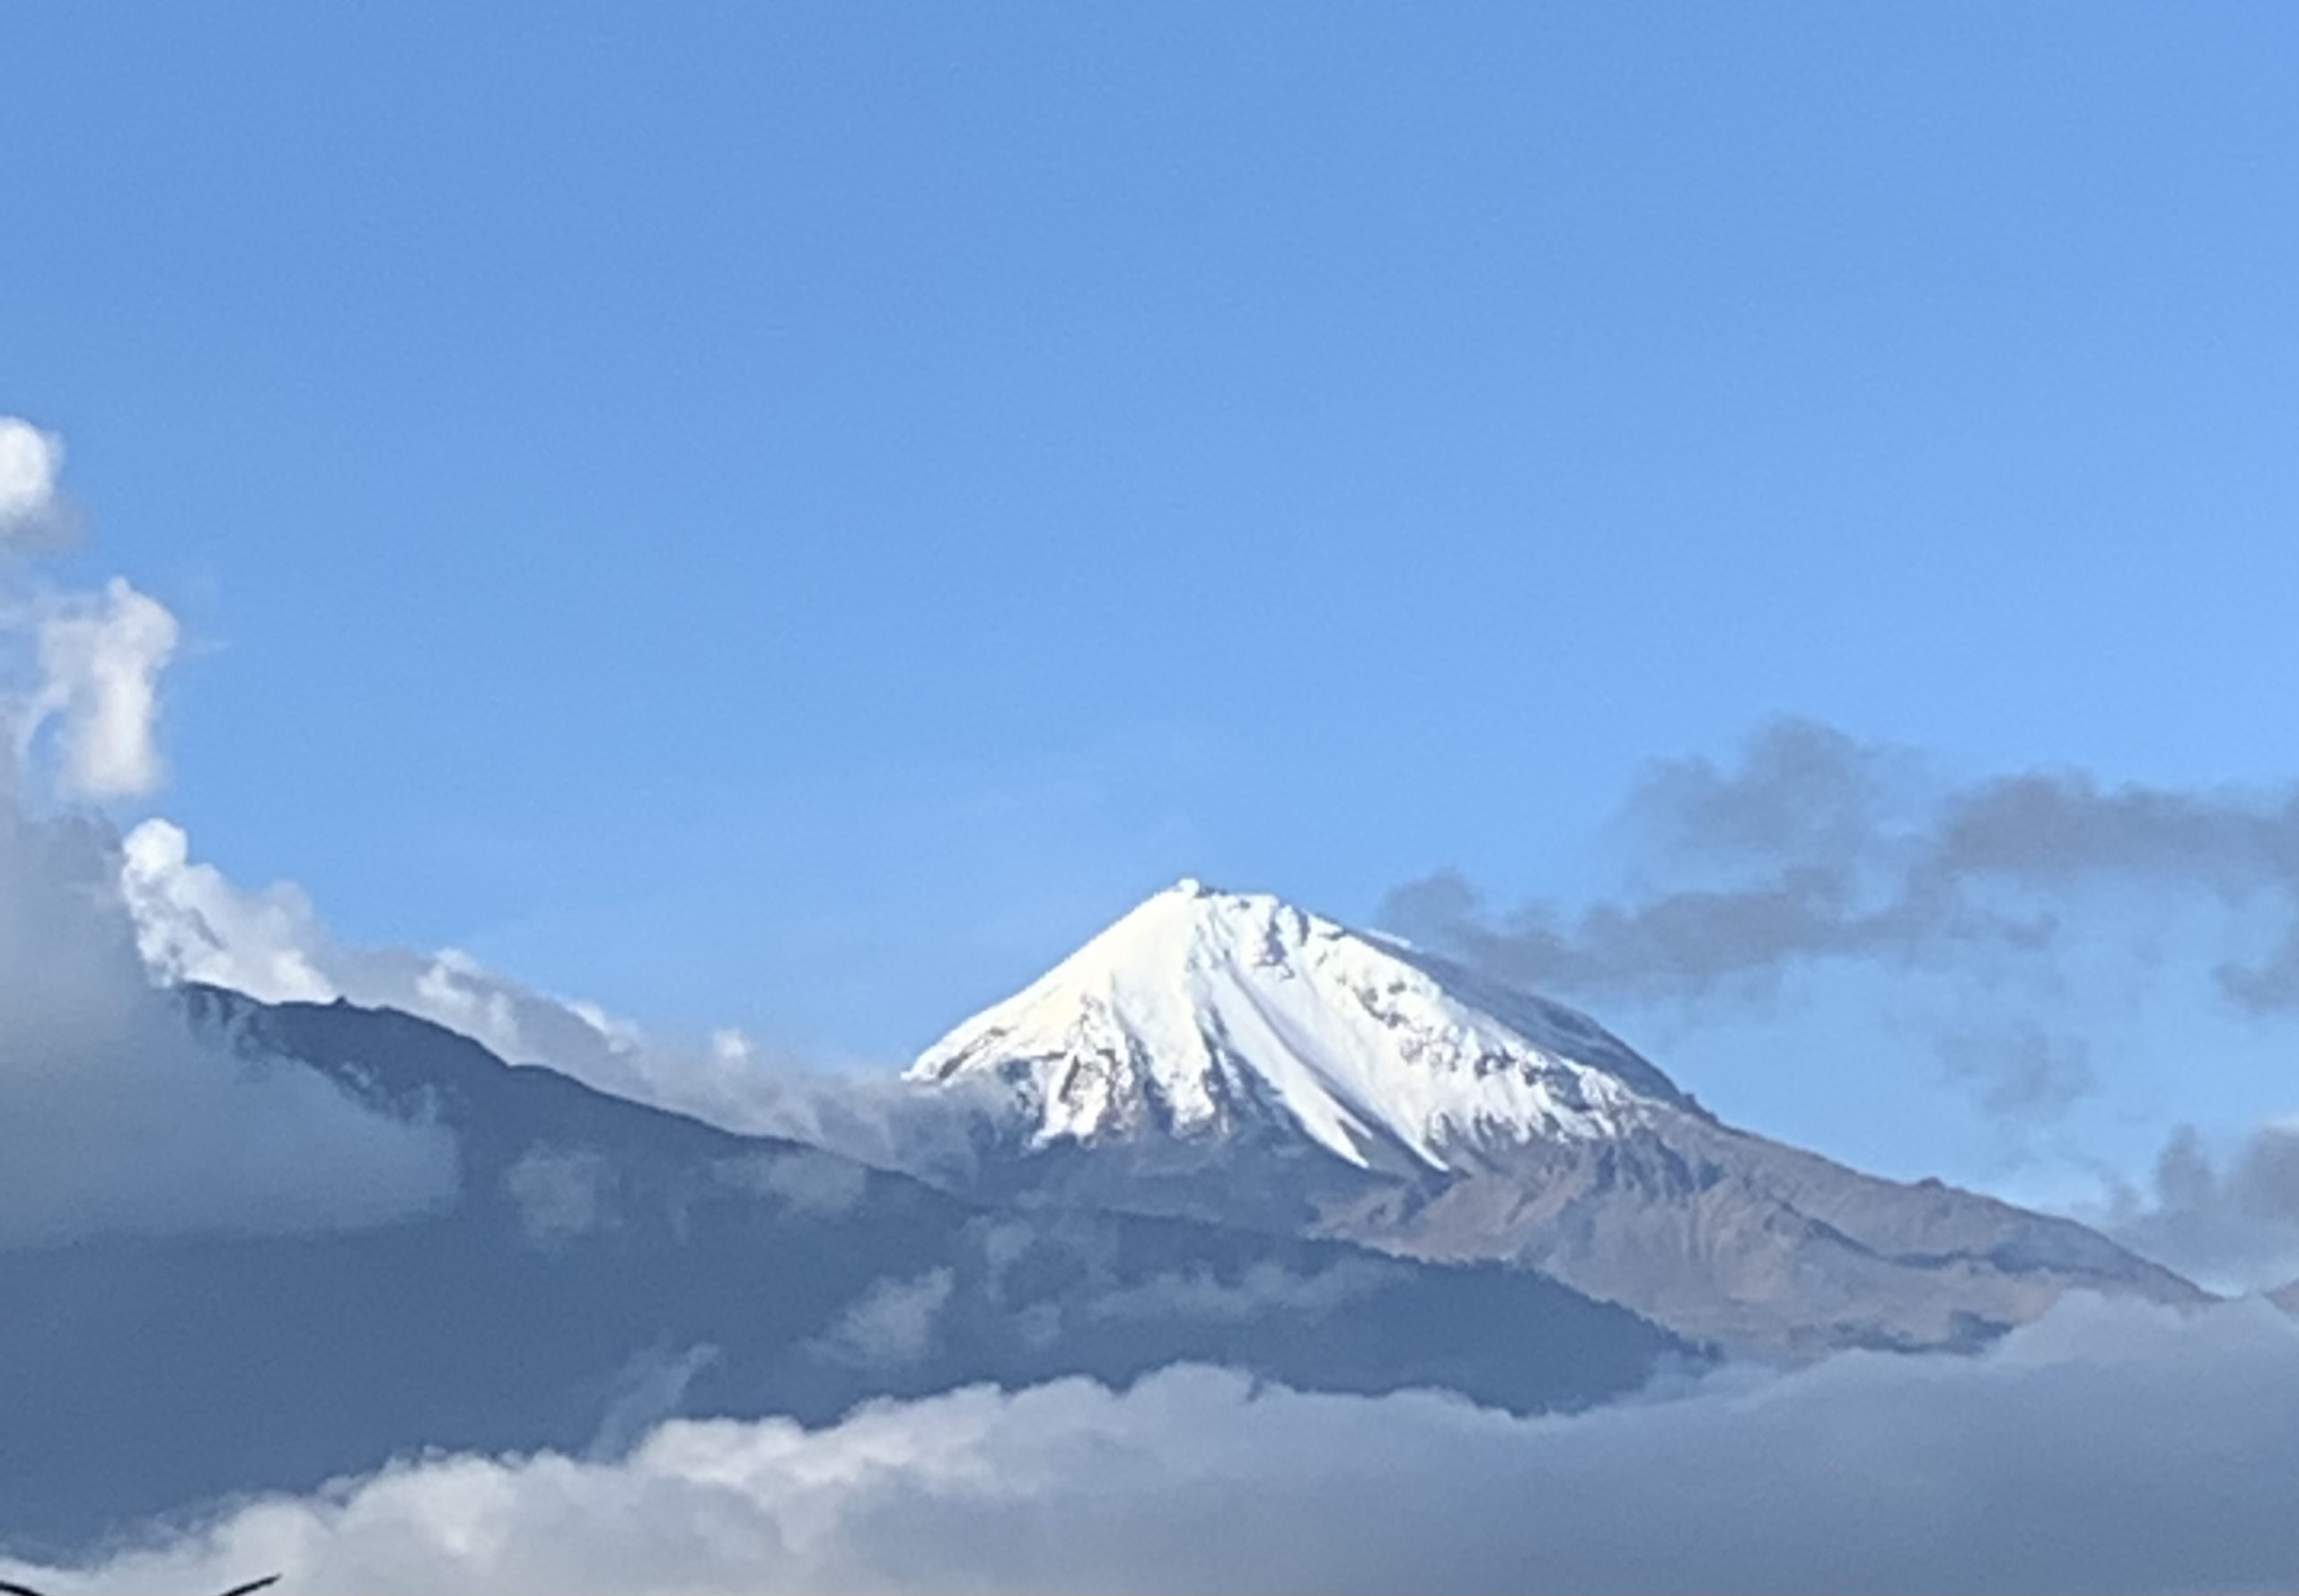 El monumental Pico de Orizaba